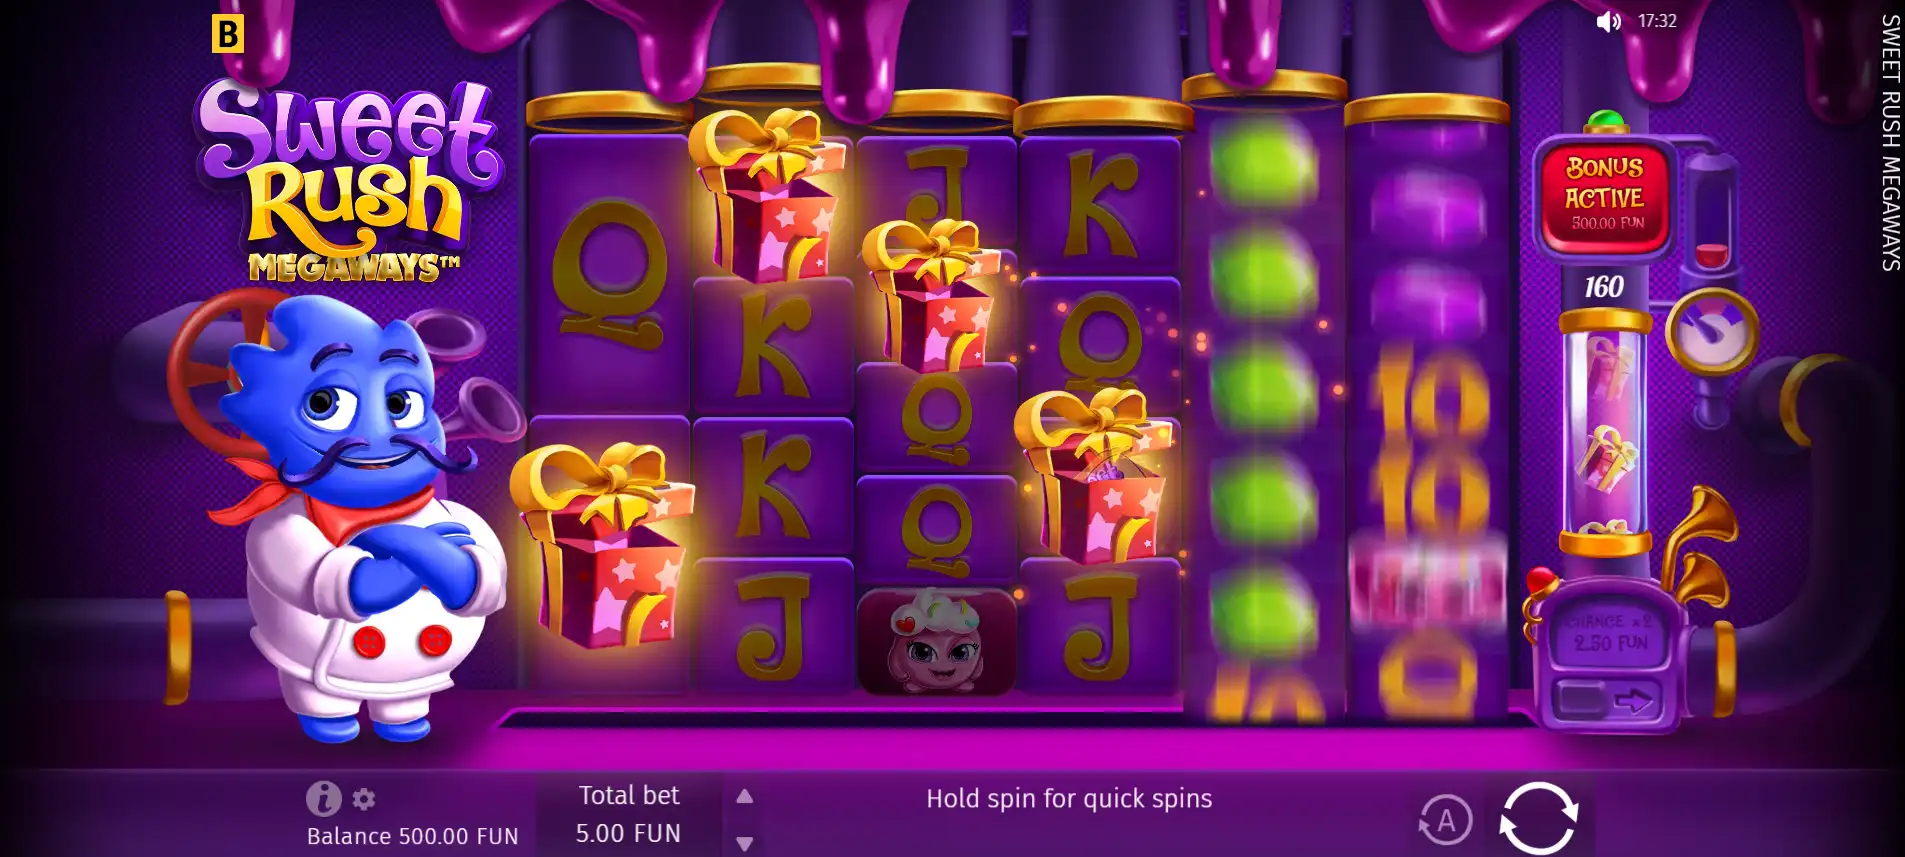 A gameplay image of bGaming's Sweet Rush Megaways